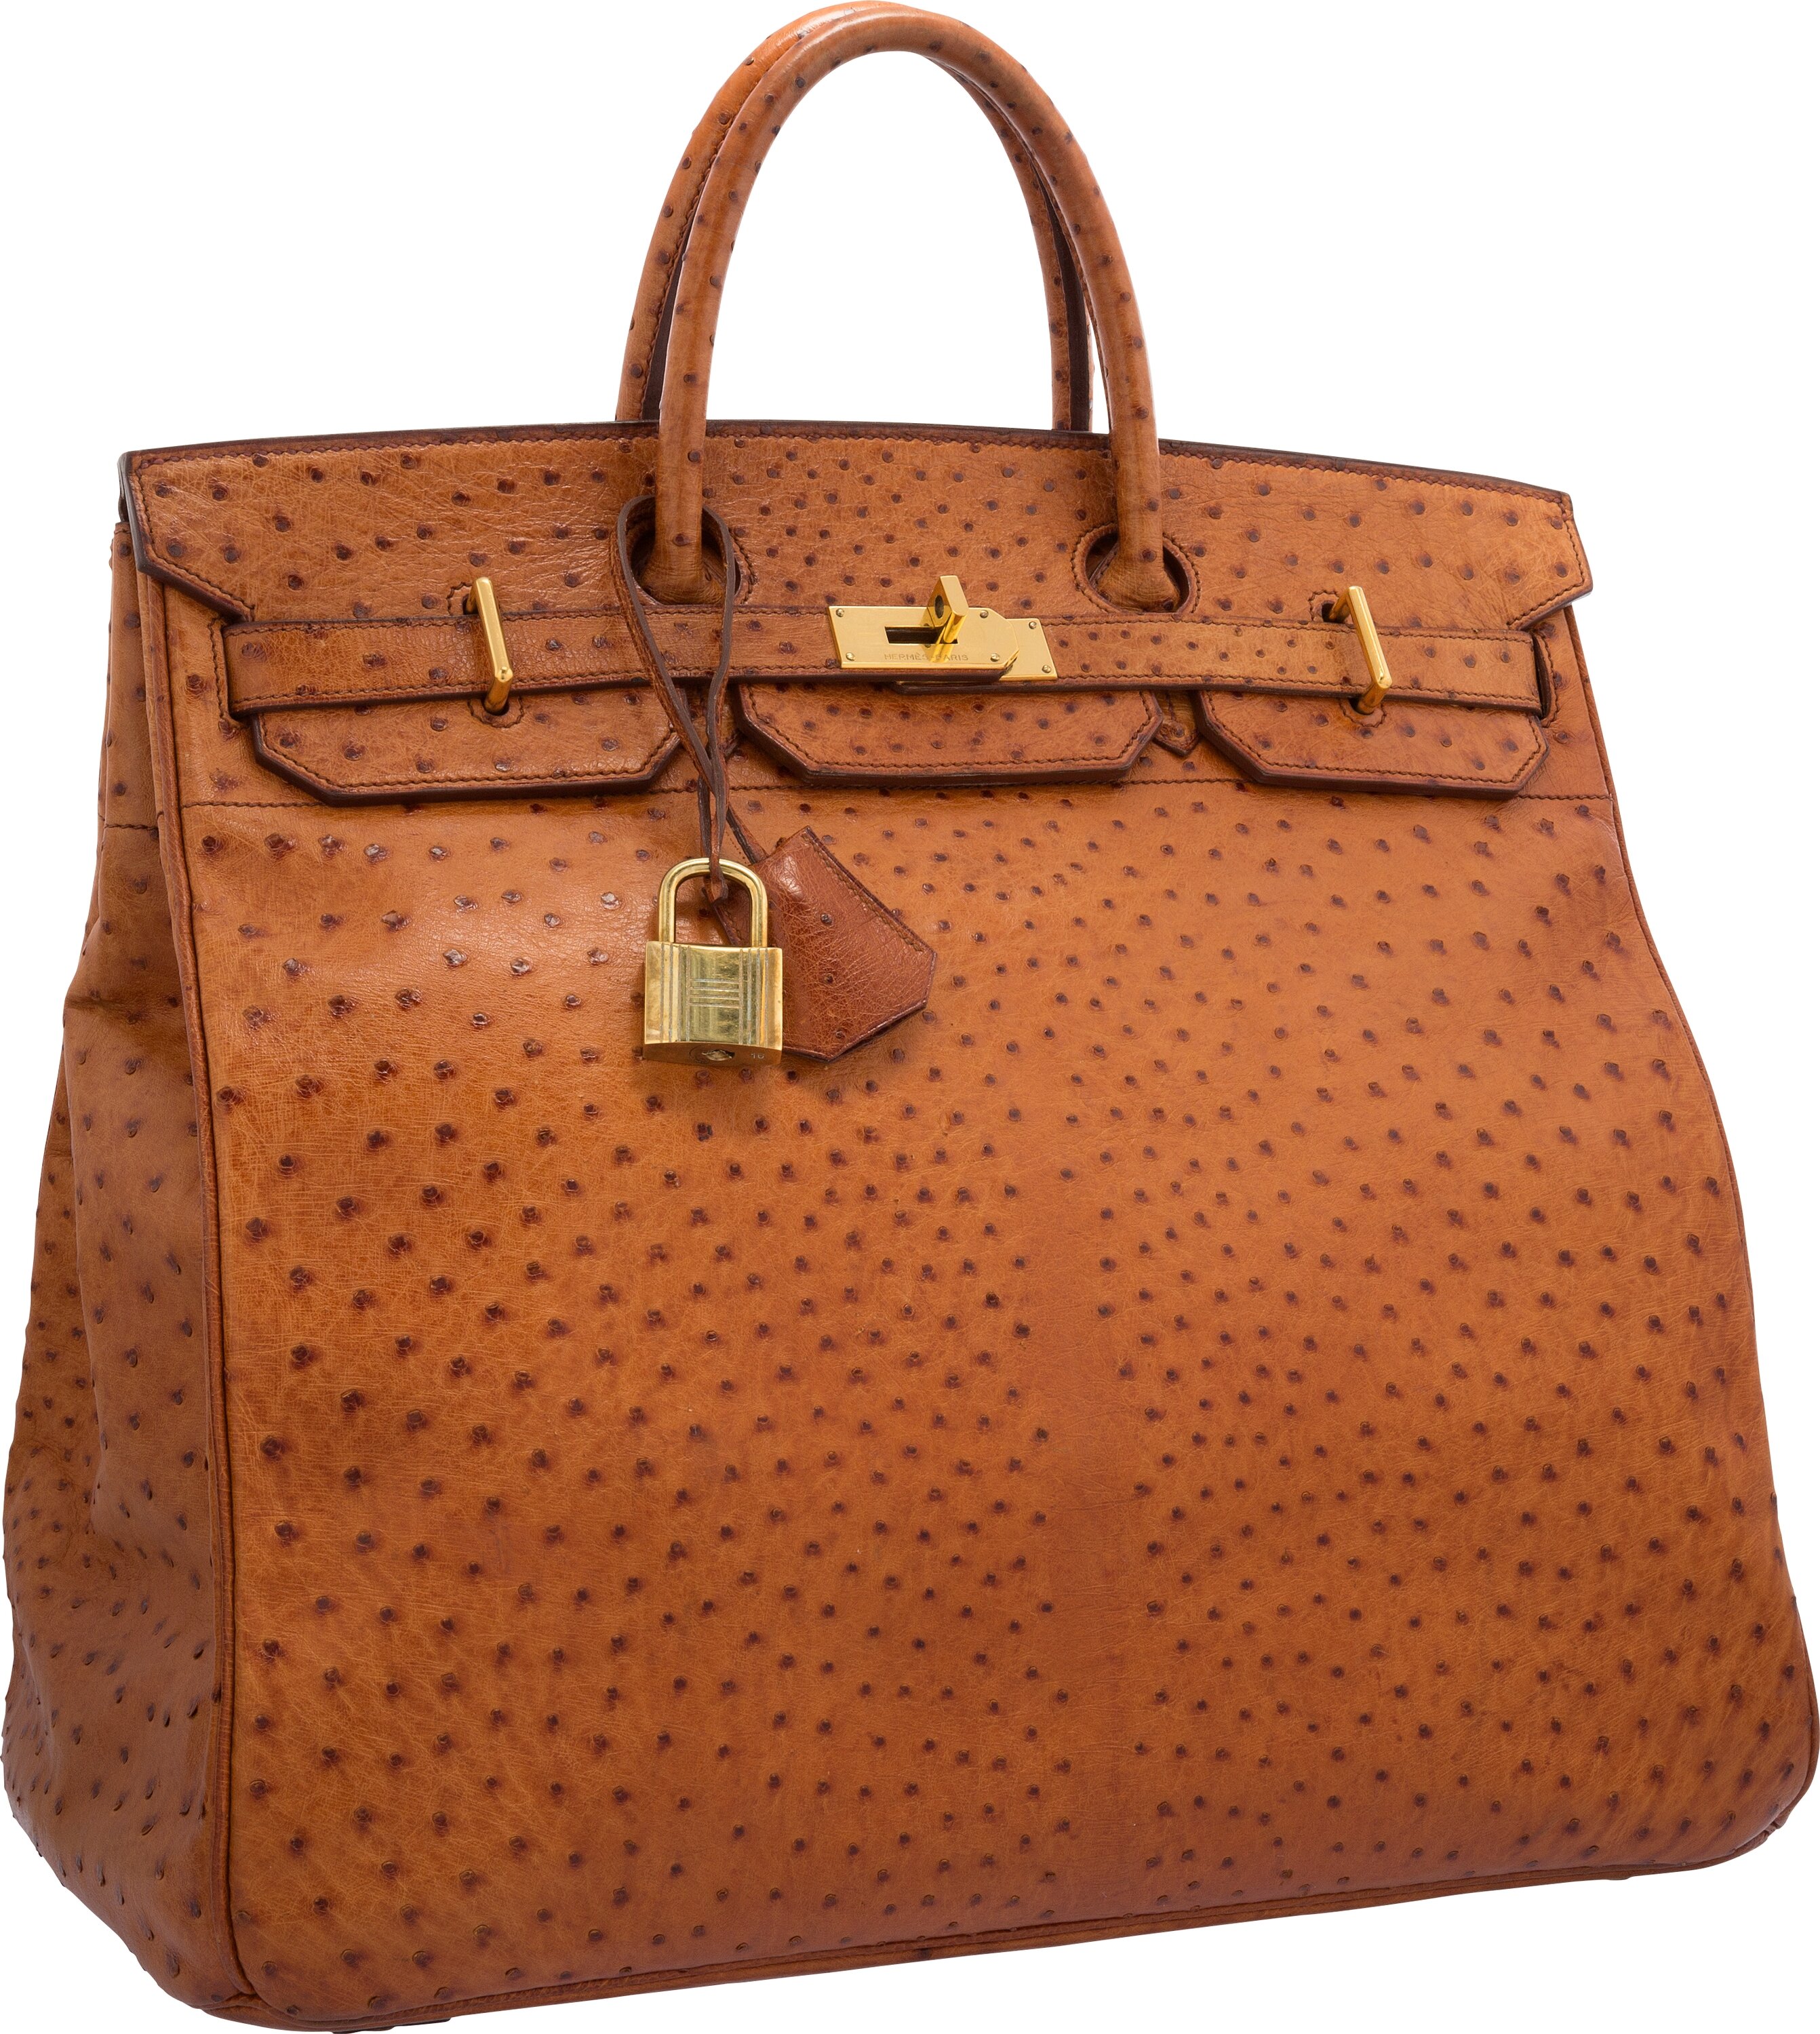 HERMÈS Vintage Ostrich Birkin 35 Bag Handbag Rare